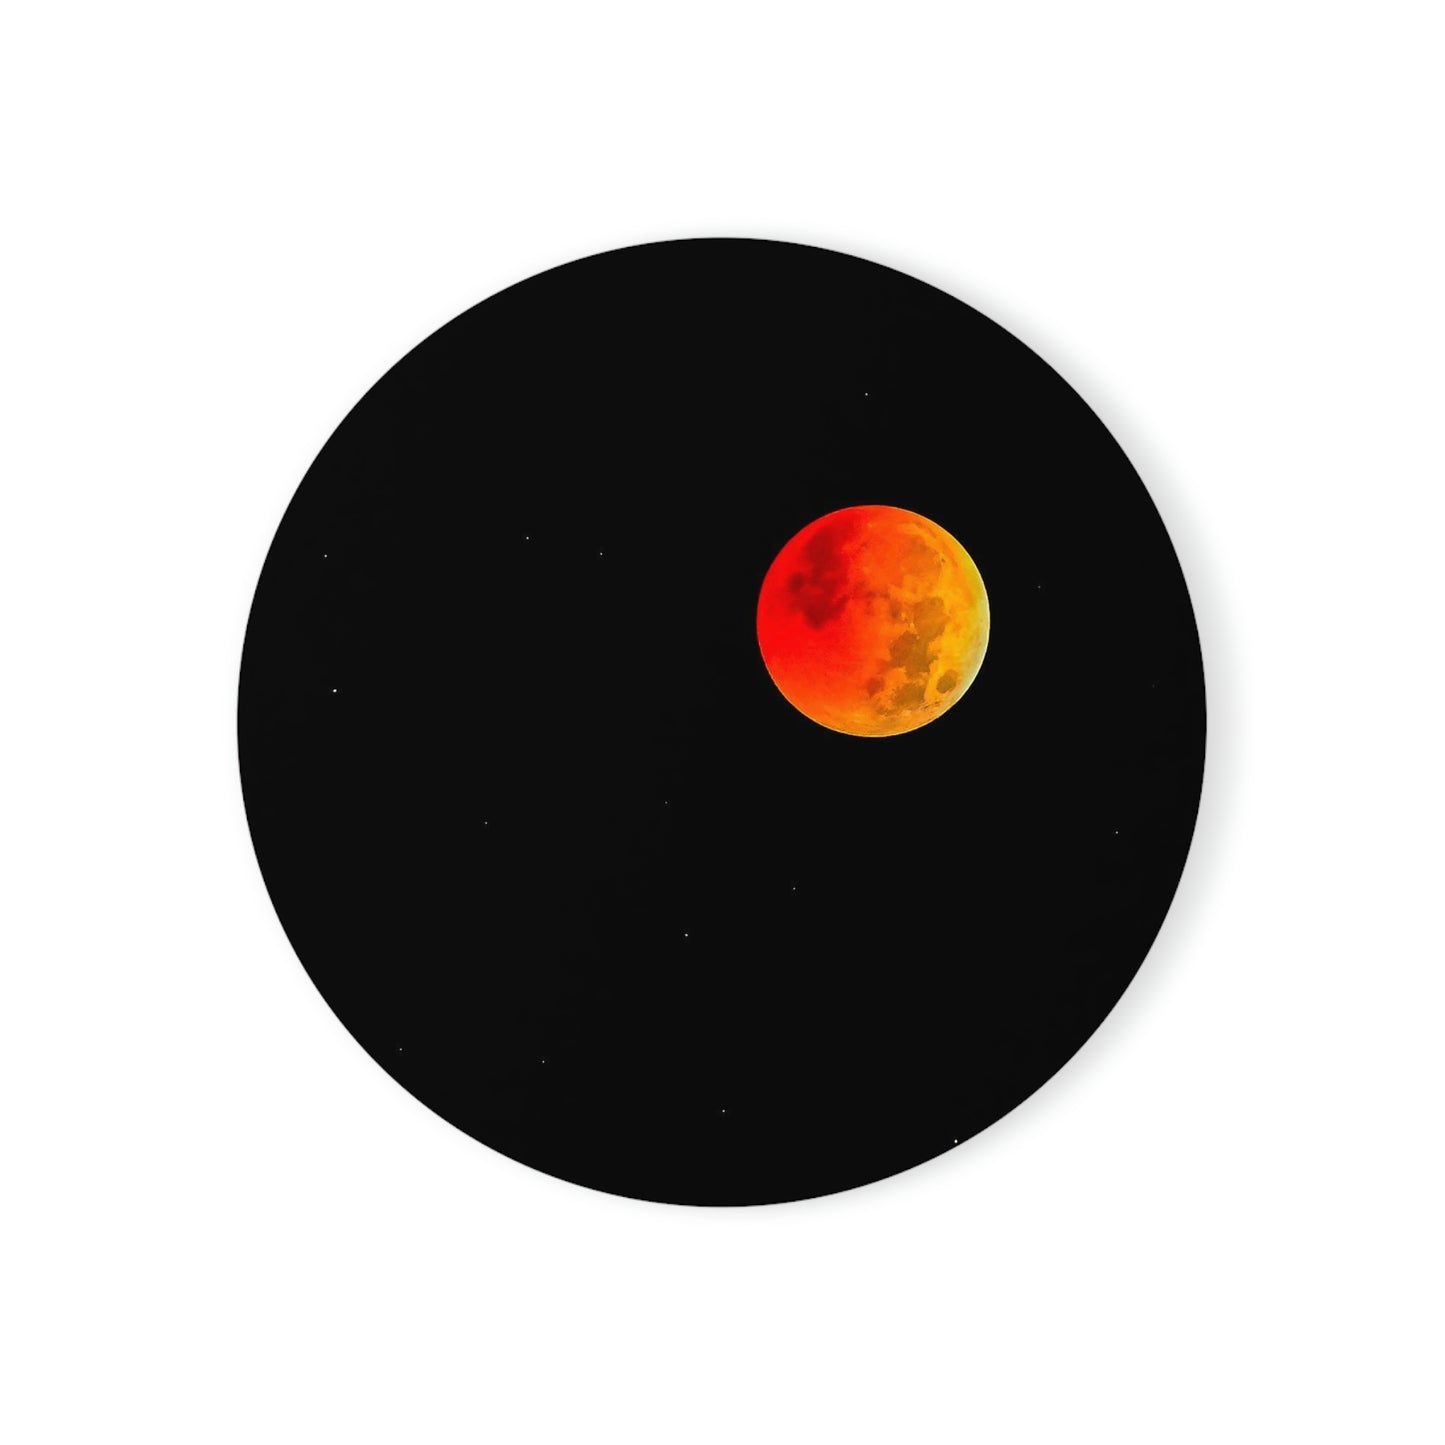 Cork Back Coaster - Lunar Eclipse